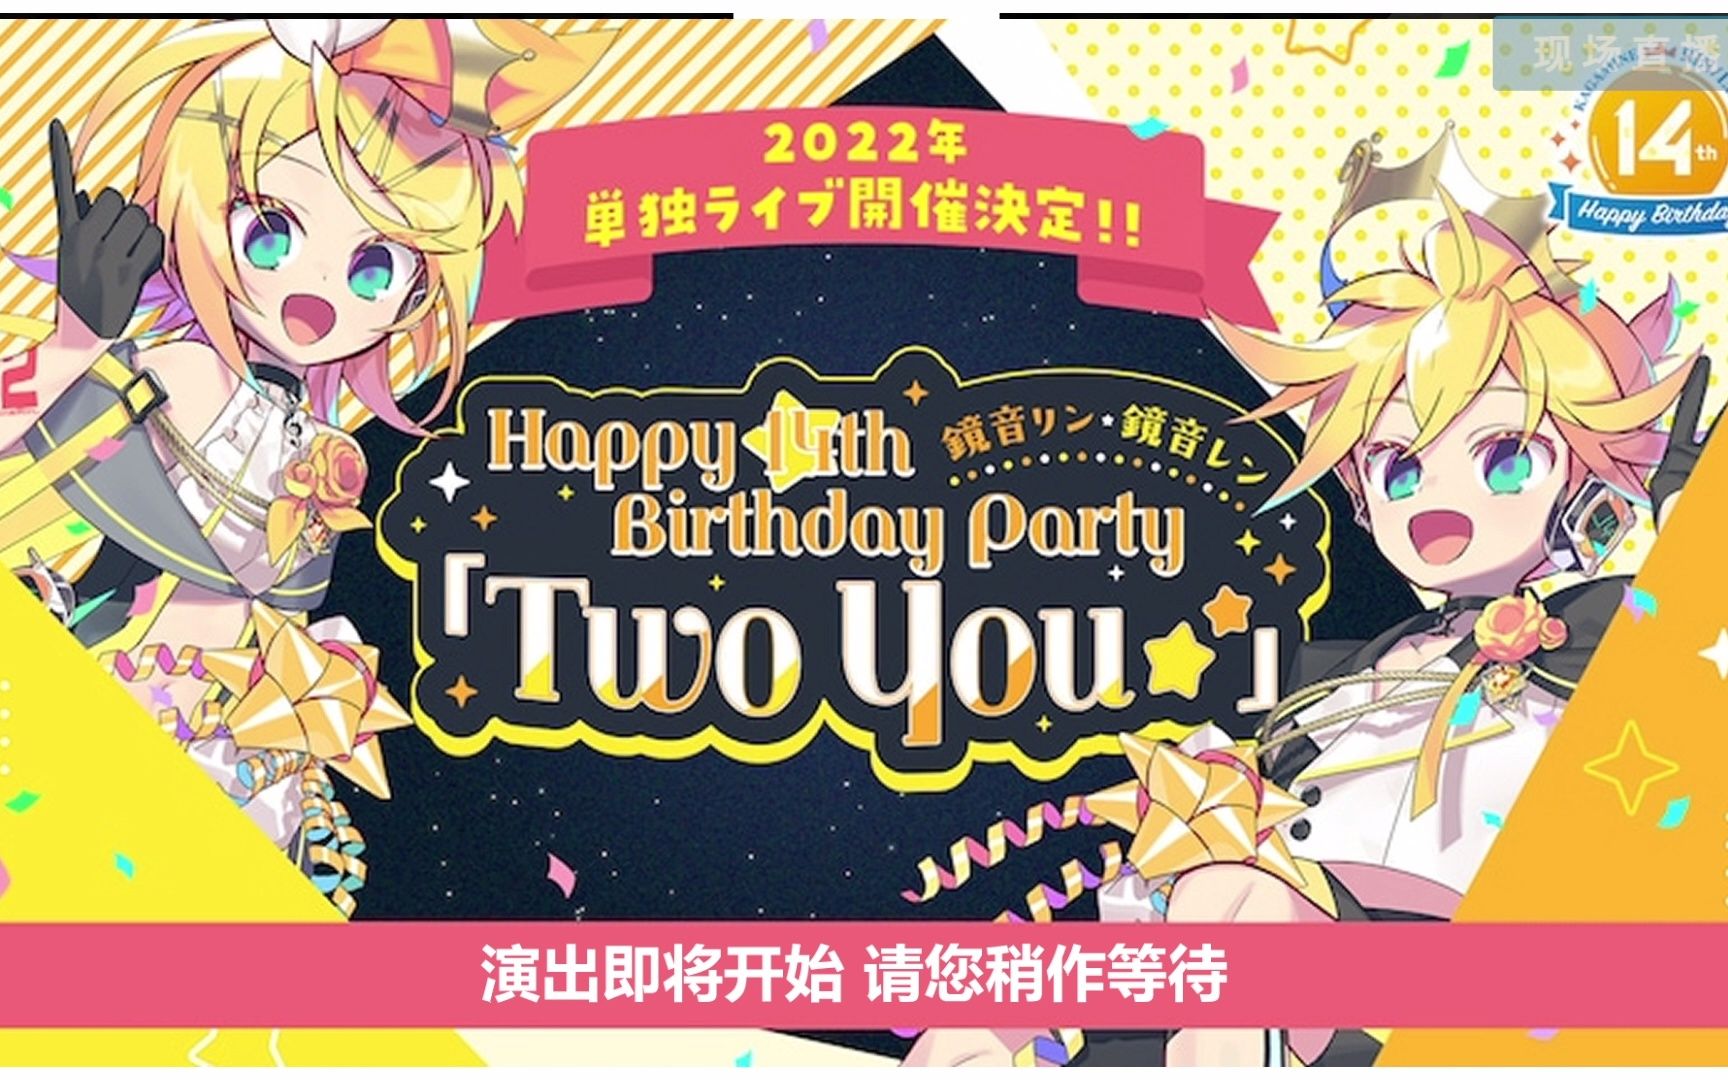 【全场回放】镜音双子演唱会 happy 14th birthday party「two you